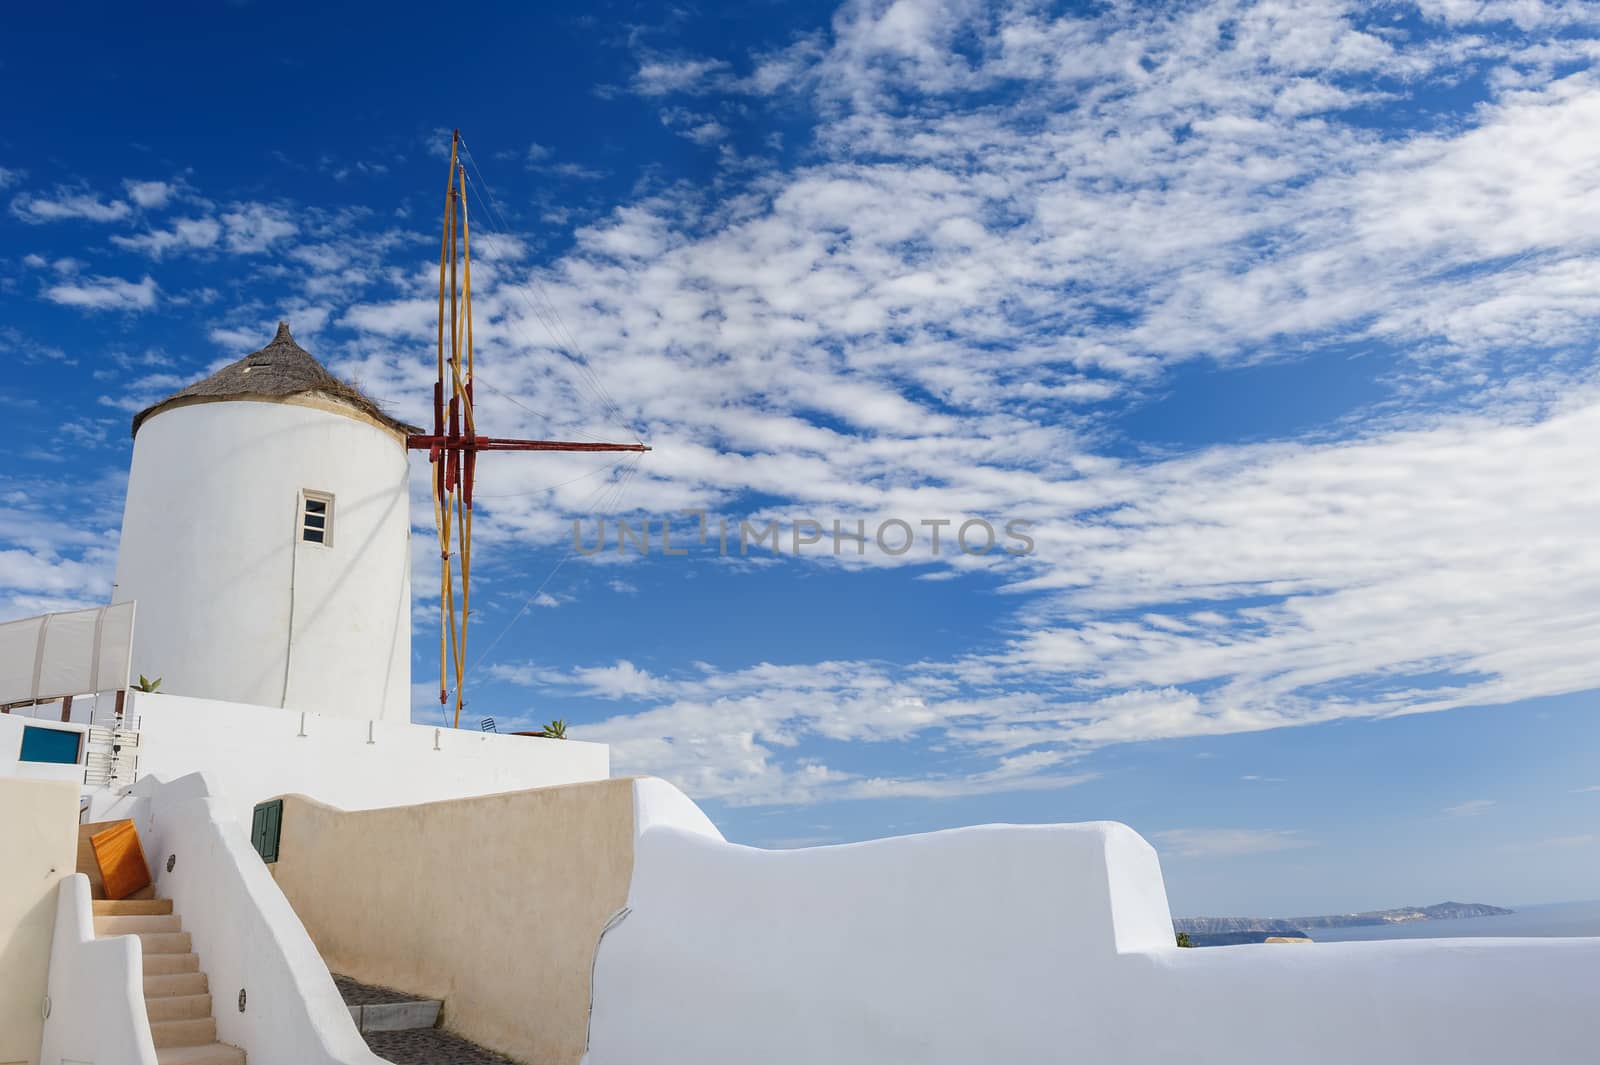 Windwill of Oia Santorini, Greece, copyspace by starush